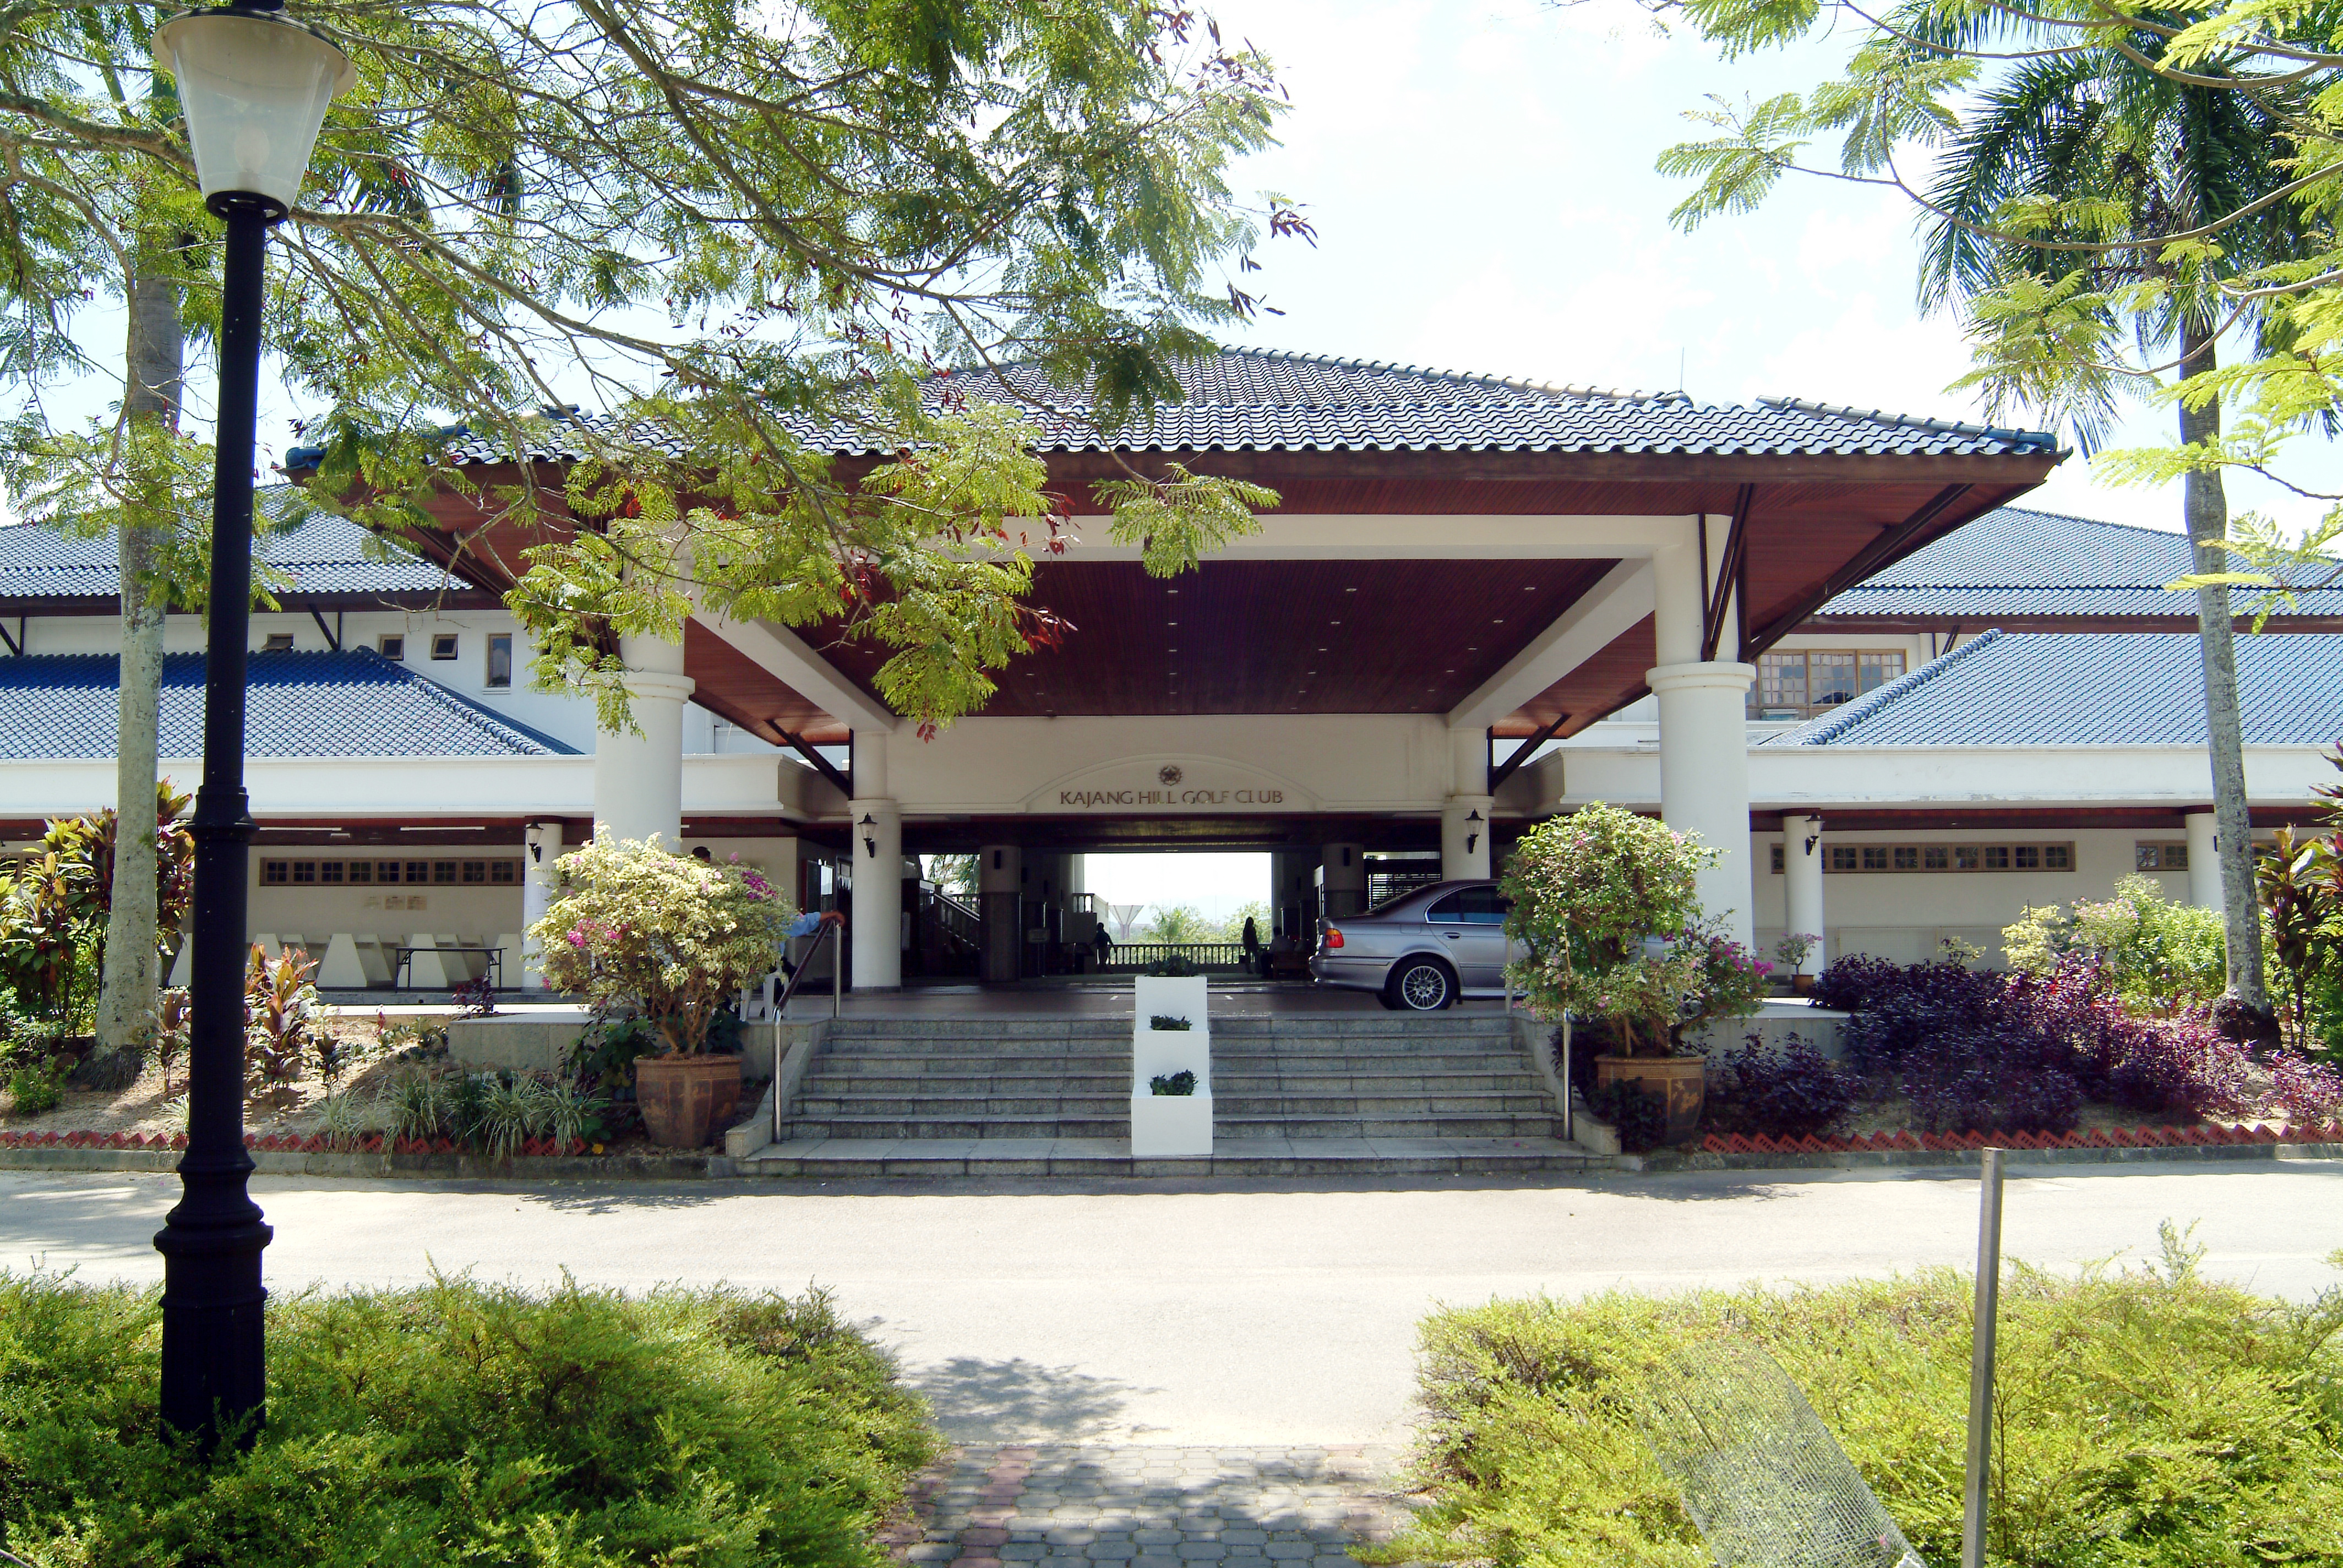 Club House and Ancillary Works for Kajang Golf Club